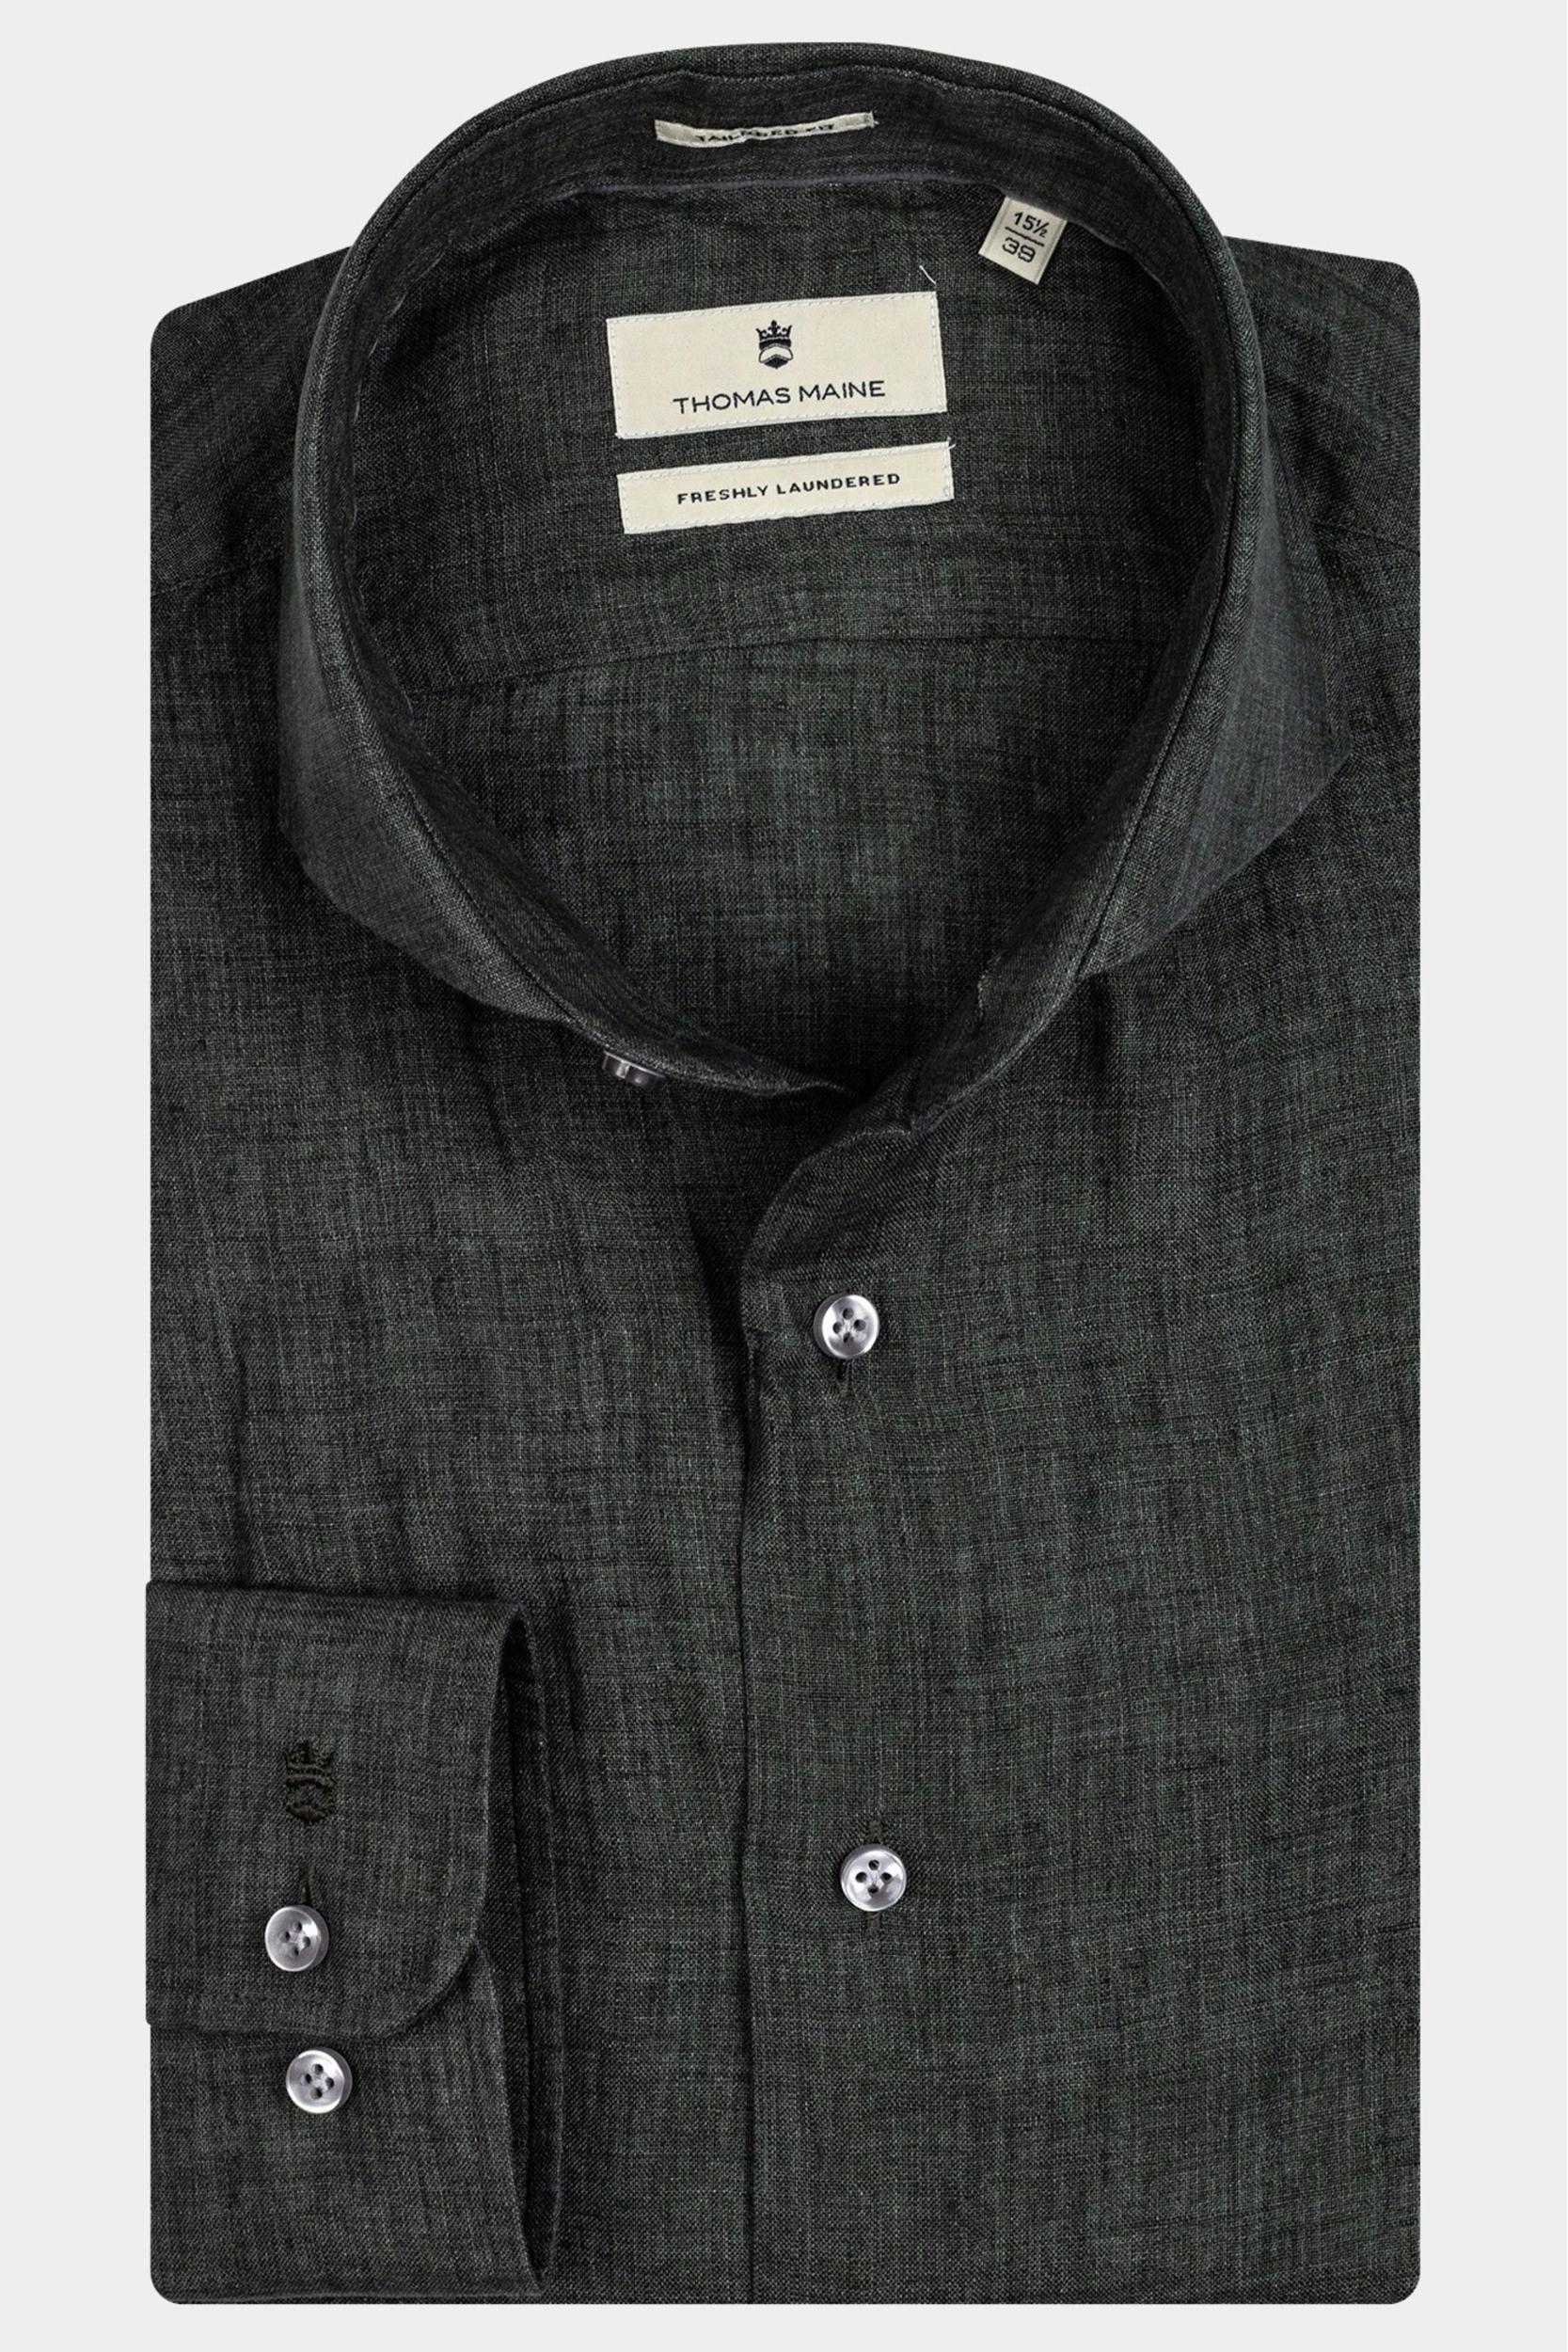 Thomas Maine Casual hemd lange mouw Groen Bari - Cutawau Collar 117757/78